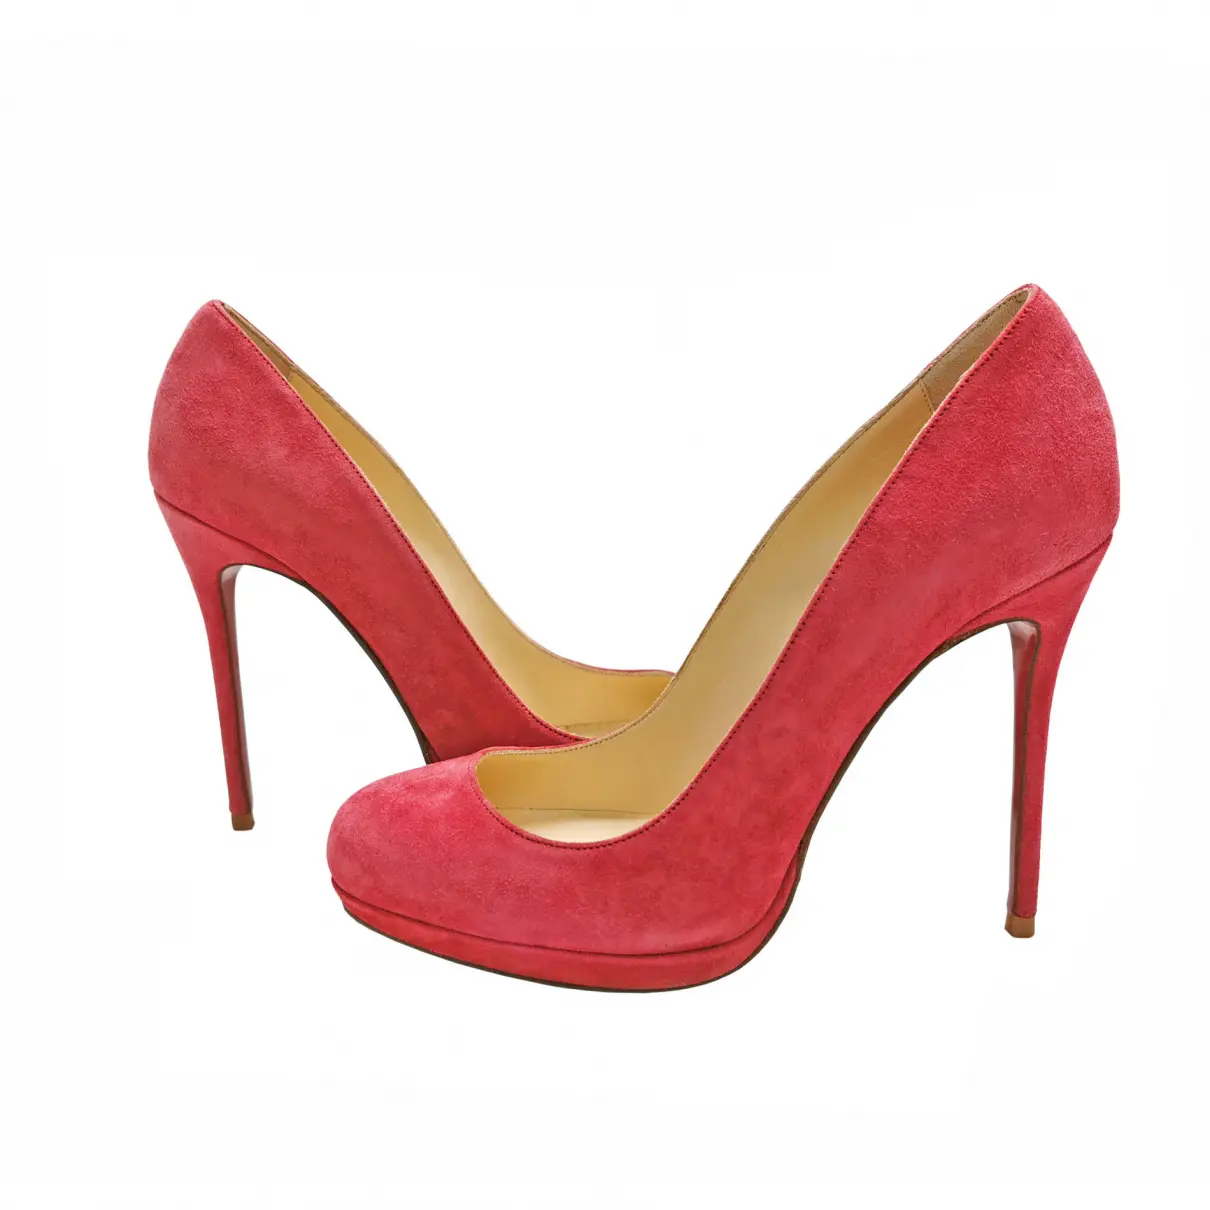 Simple pump velvet heels Christian Louboutin